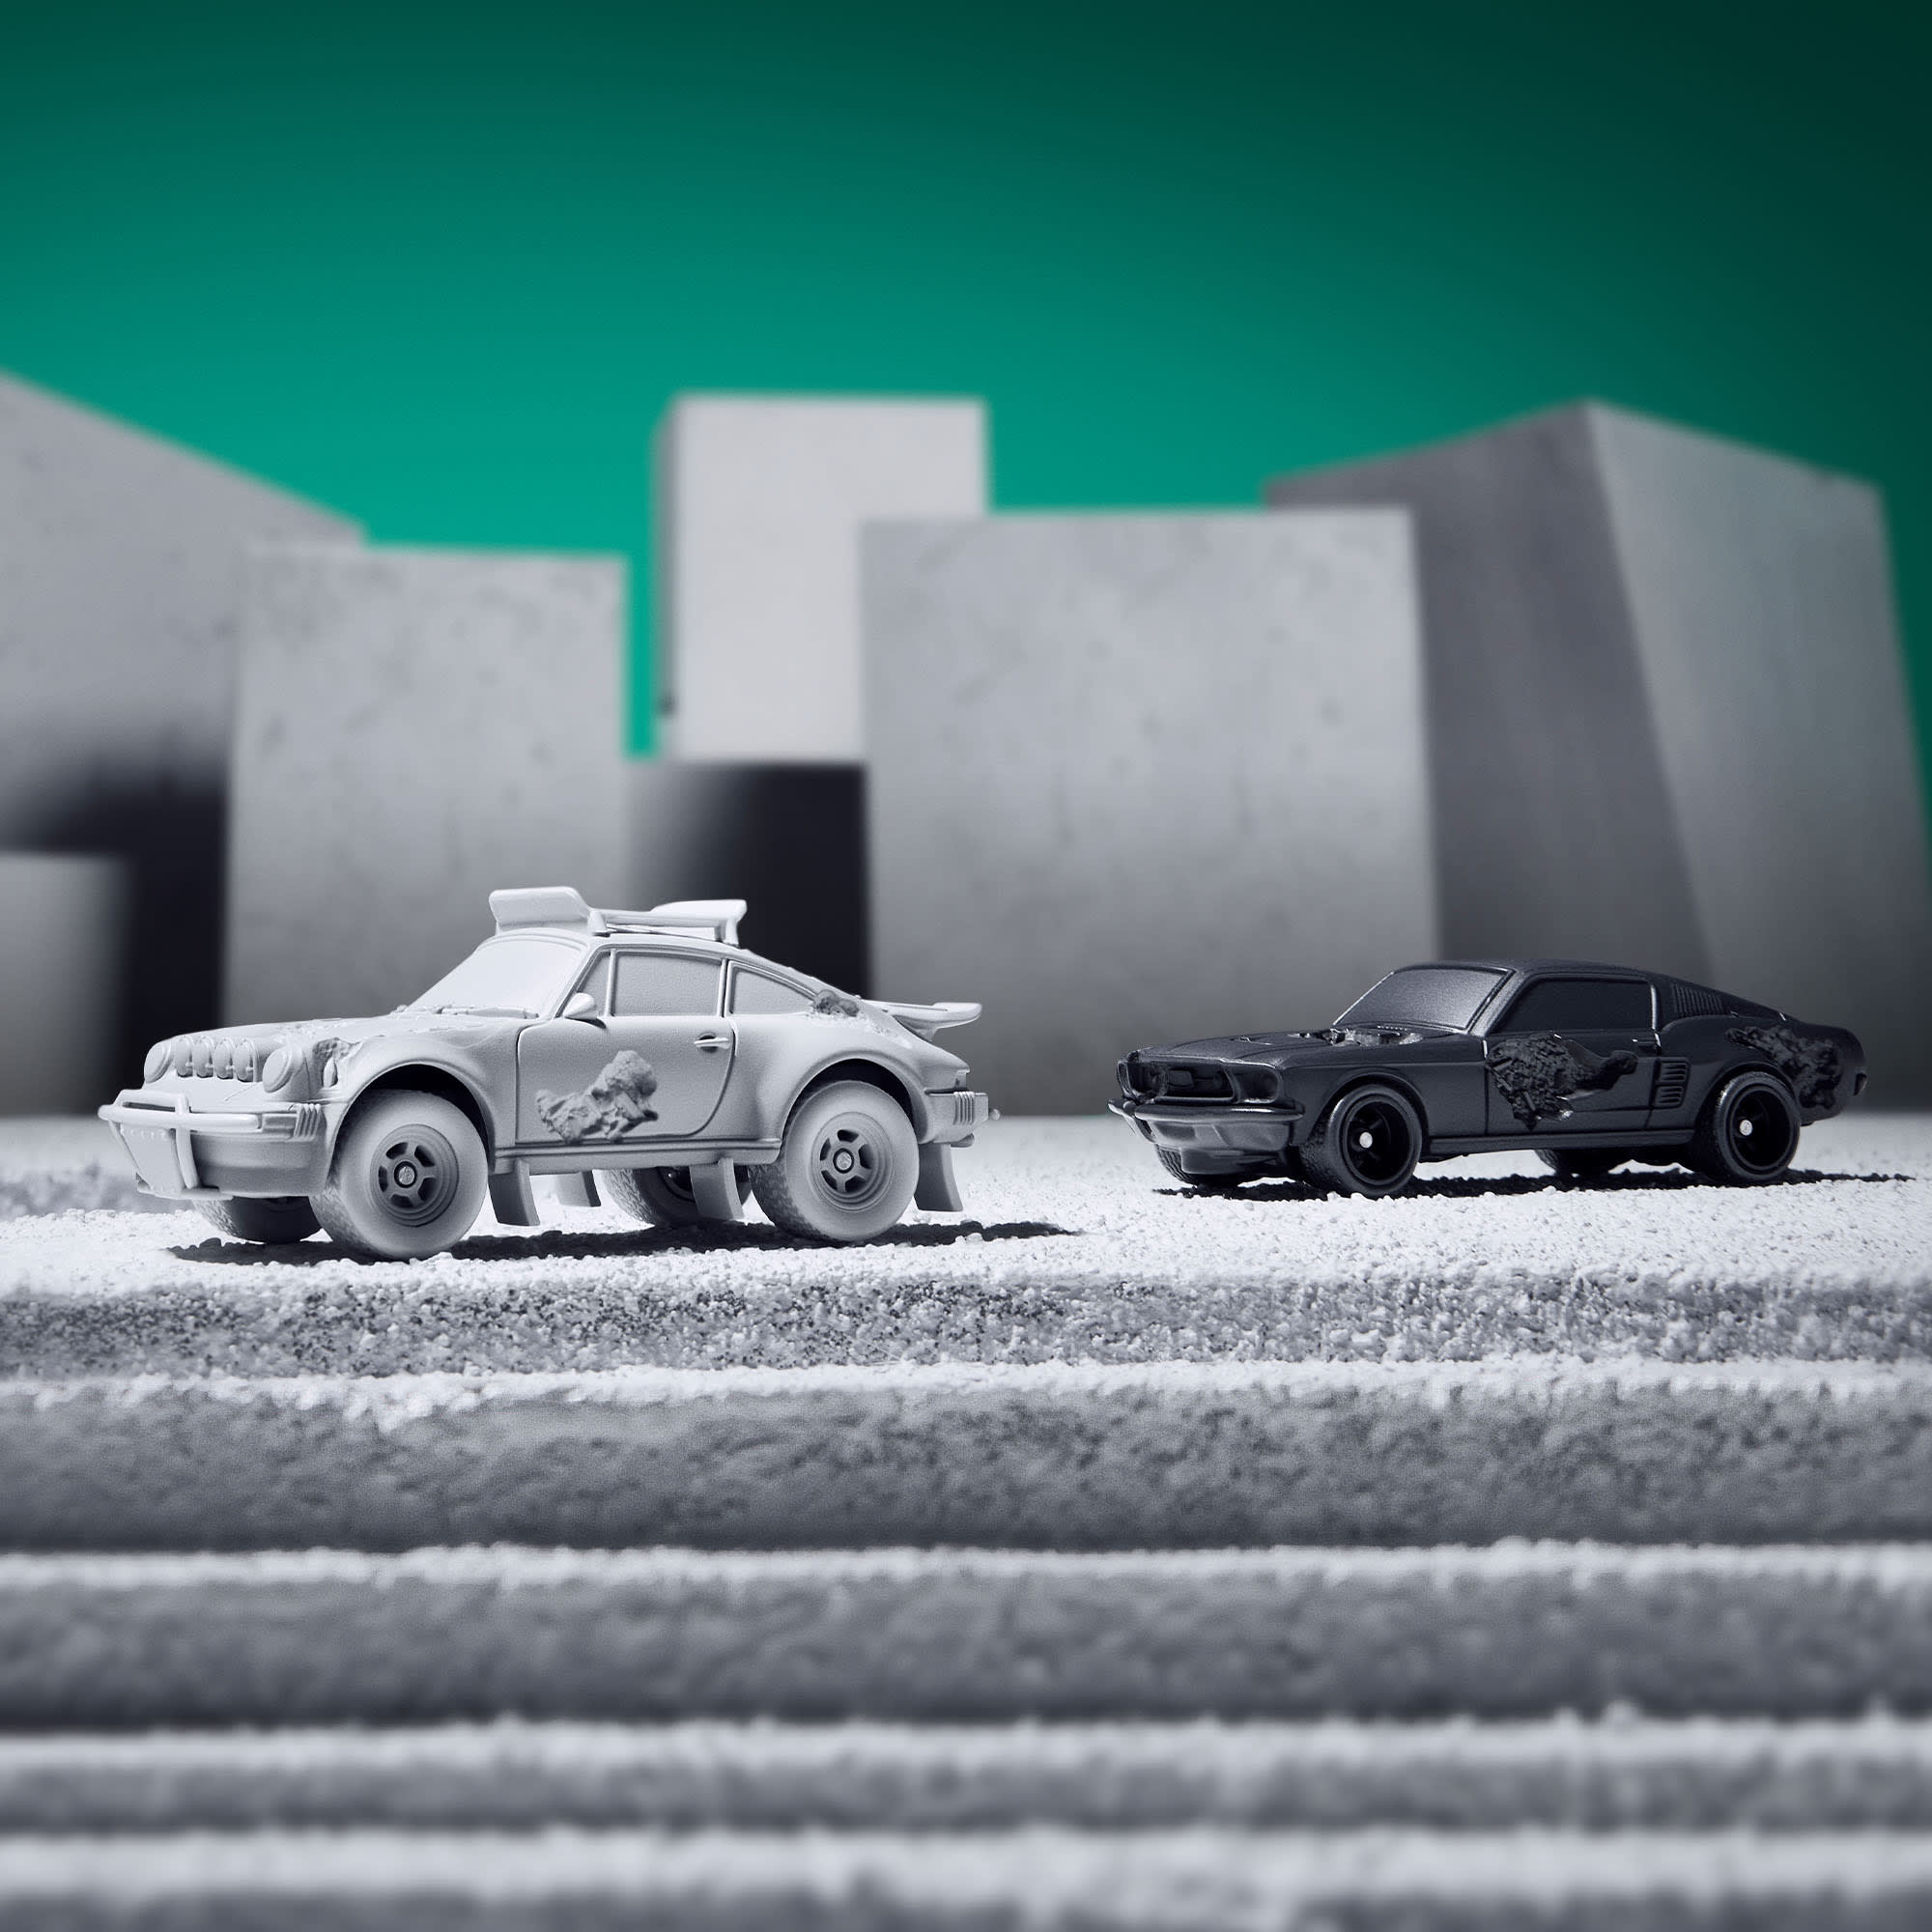 Hot Wheels x Daniel Arsham Eroded Porsche Safari | Mattel Creations